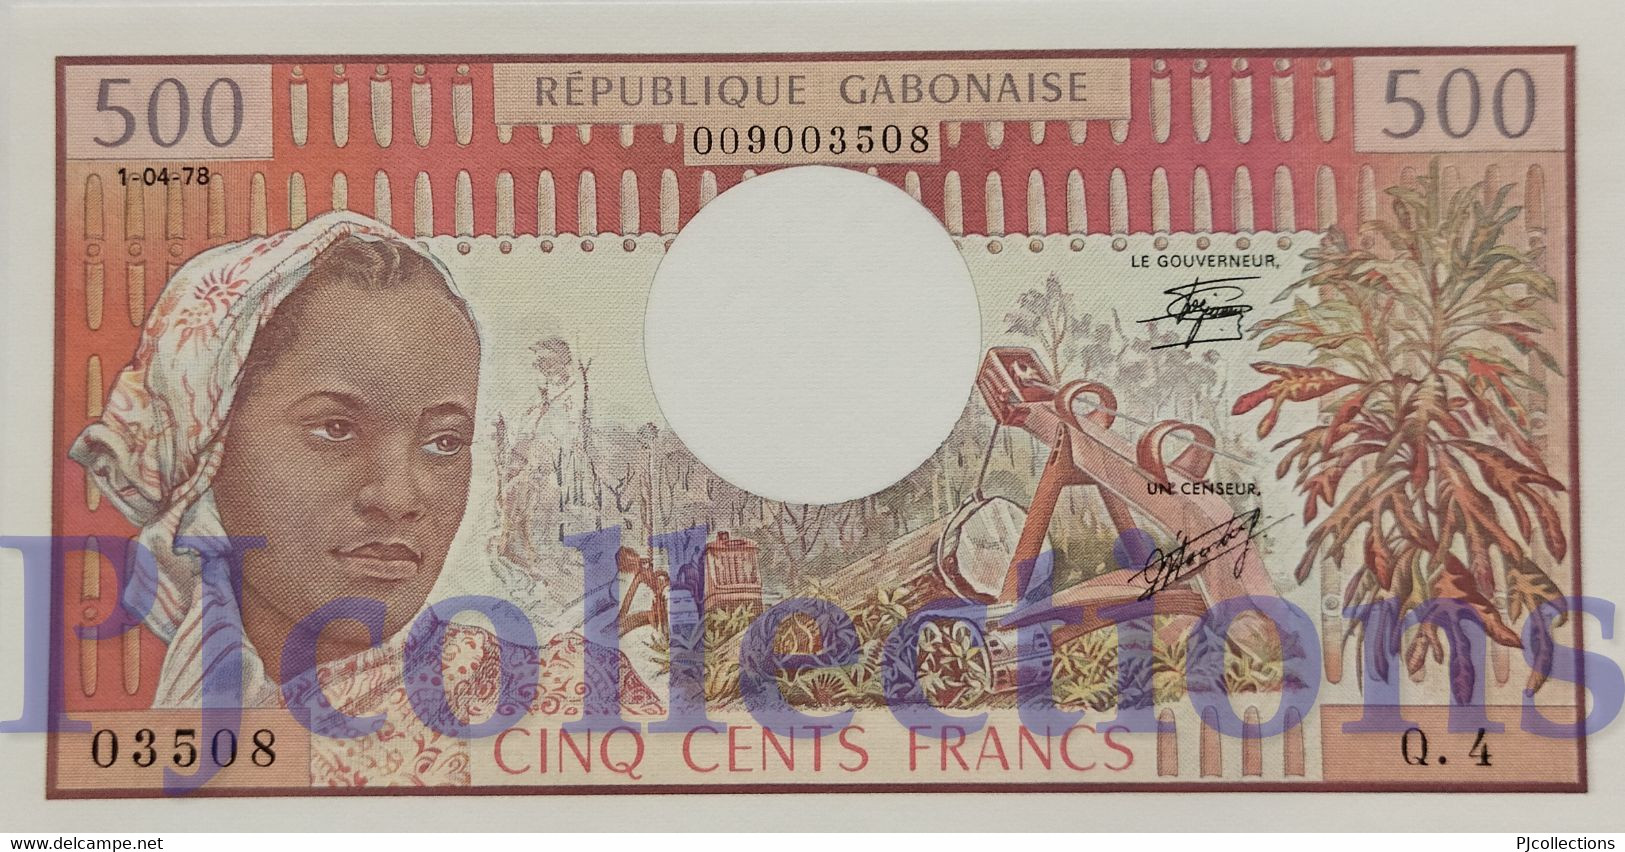 GABON 500 FRANCS 1978 PICK 2b UNC - Gabon